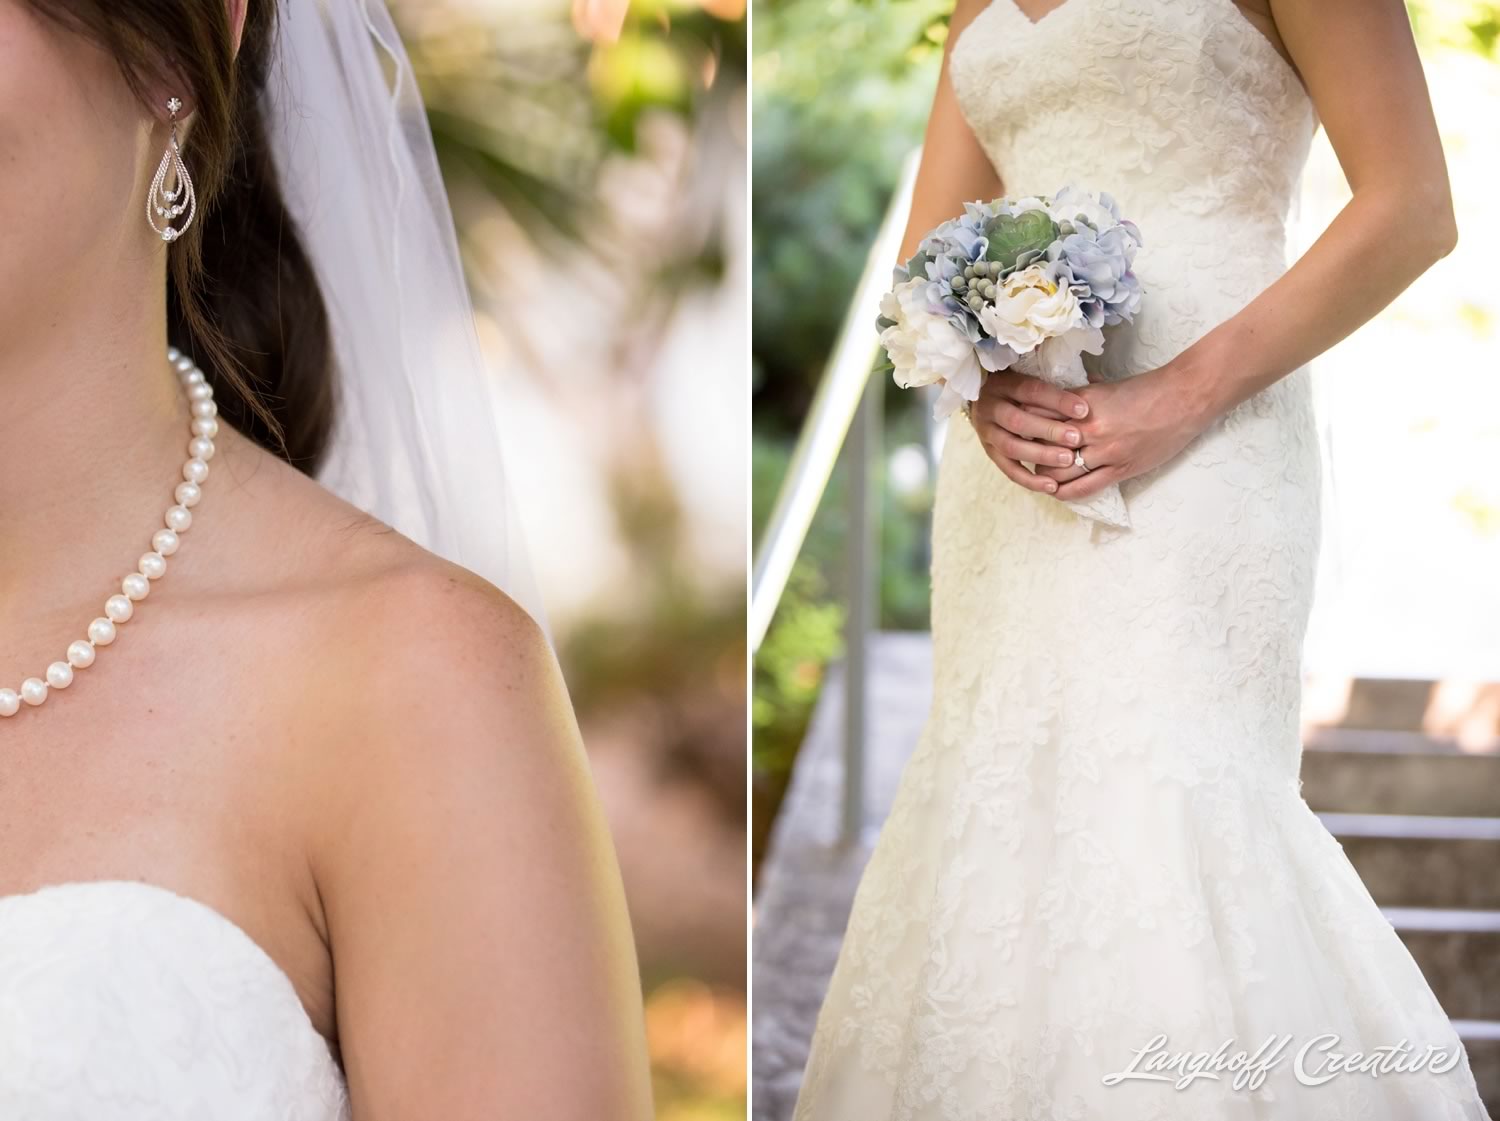 BridalSession-Bridals-RaleighBride-NCbride-JCRaulstonArboretum-RaleighWedding-WeddingPhotographer-LanghoffCreative-Amy2015-Bride-14-photo.jpg